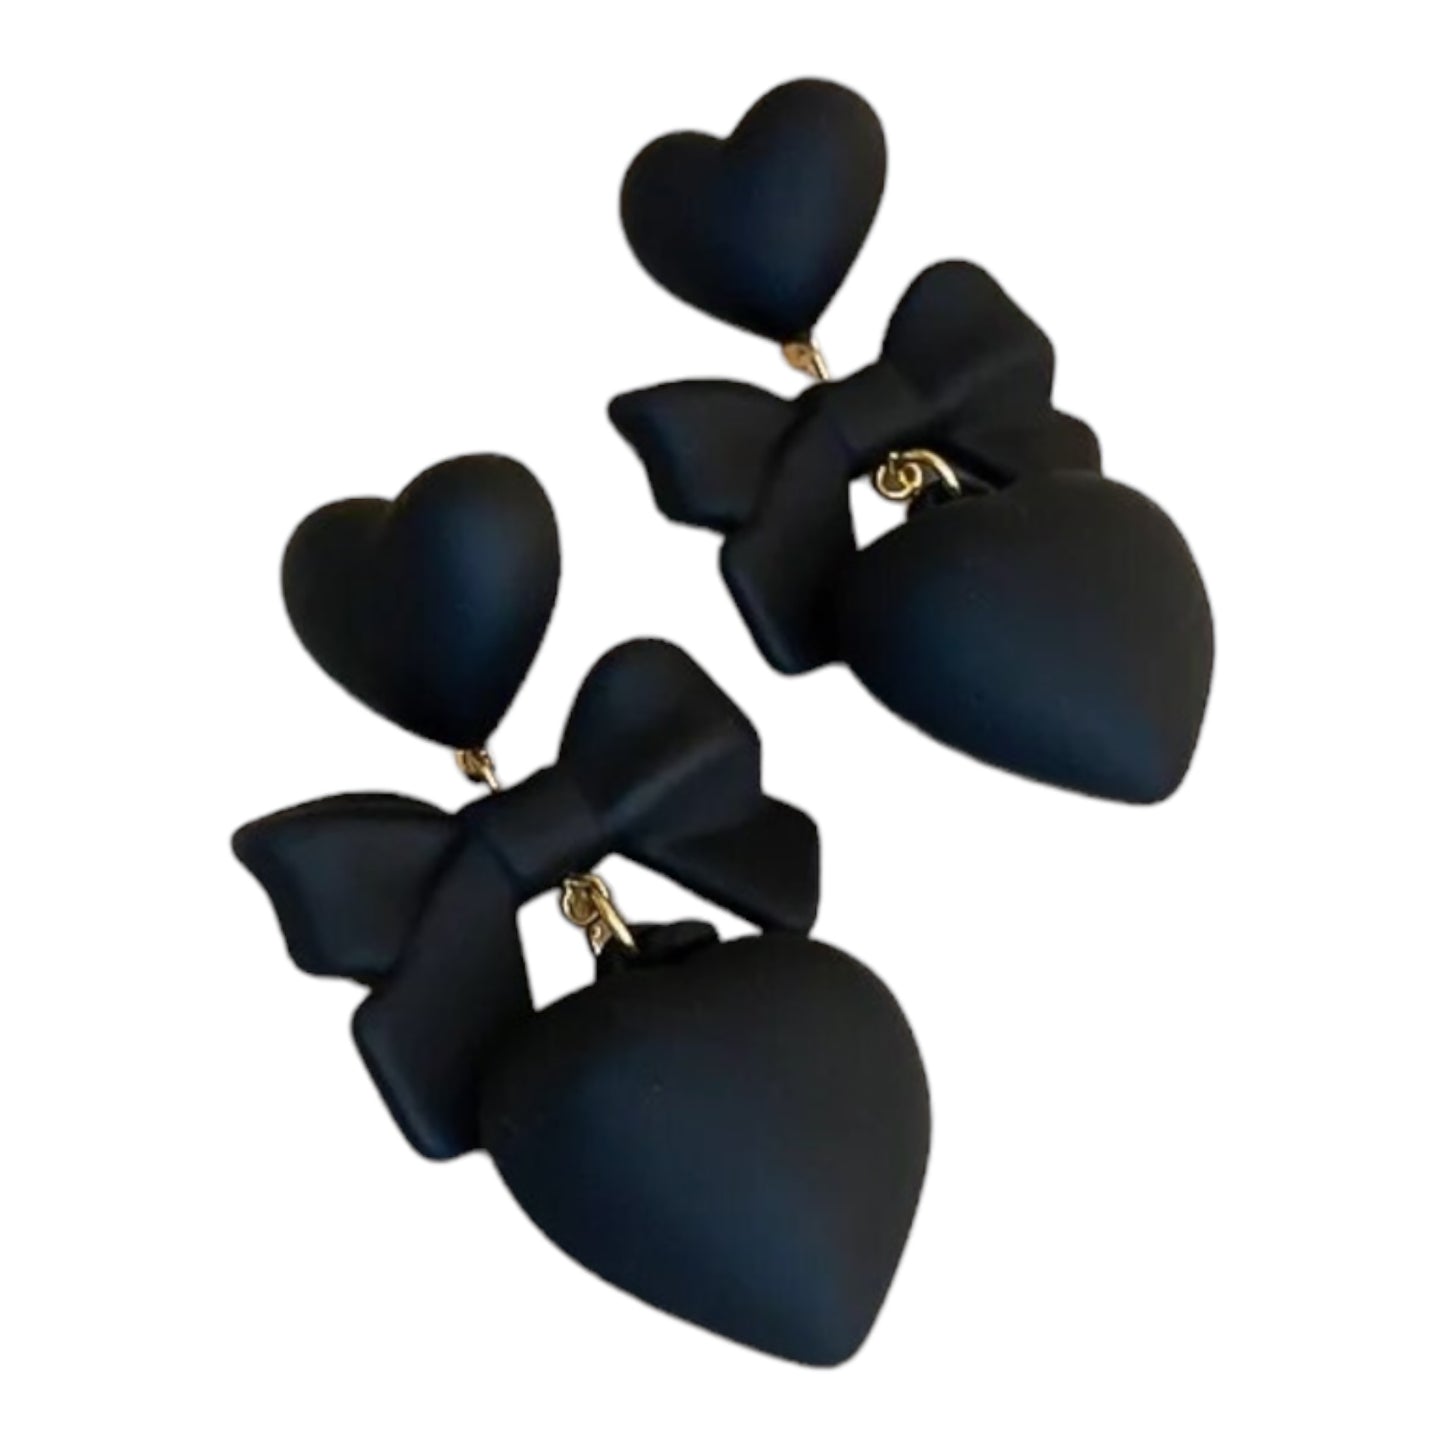 Black Ribbon and Heart Earrings